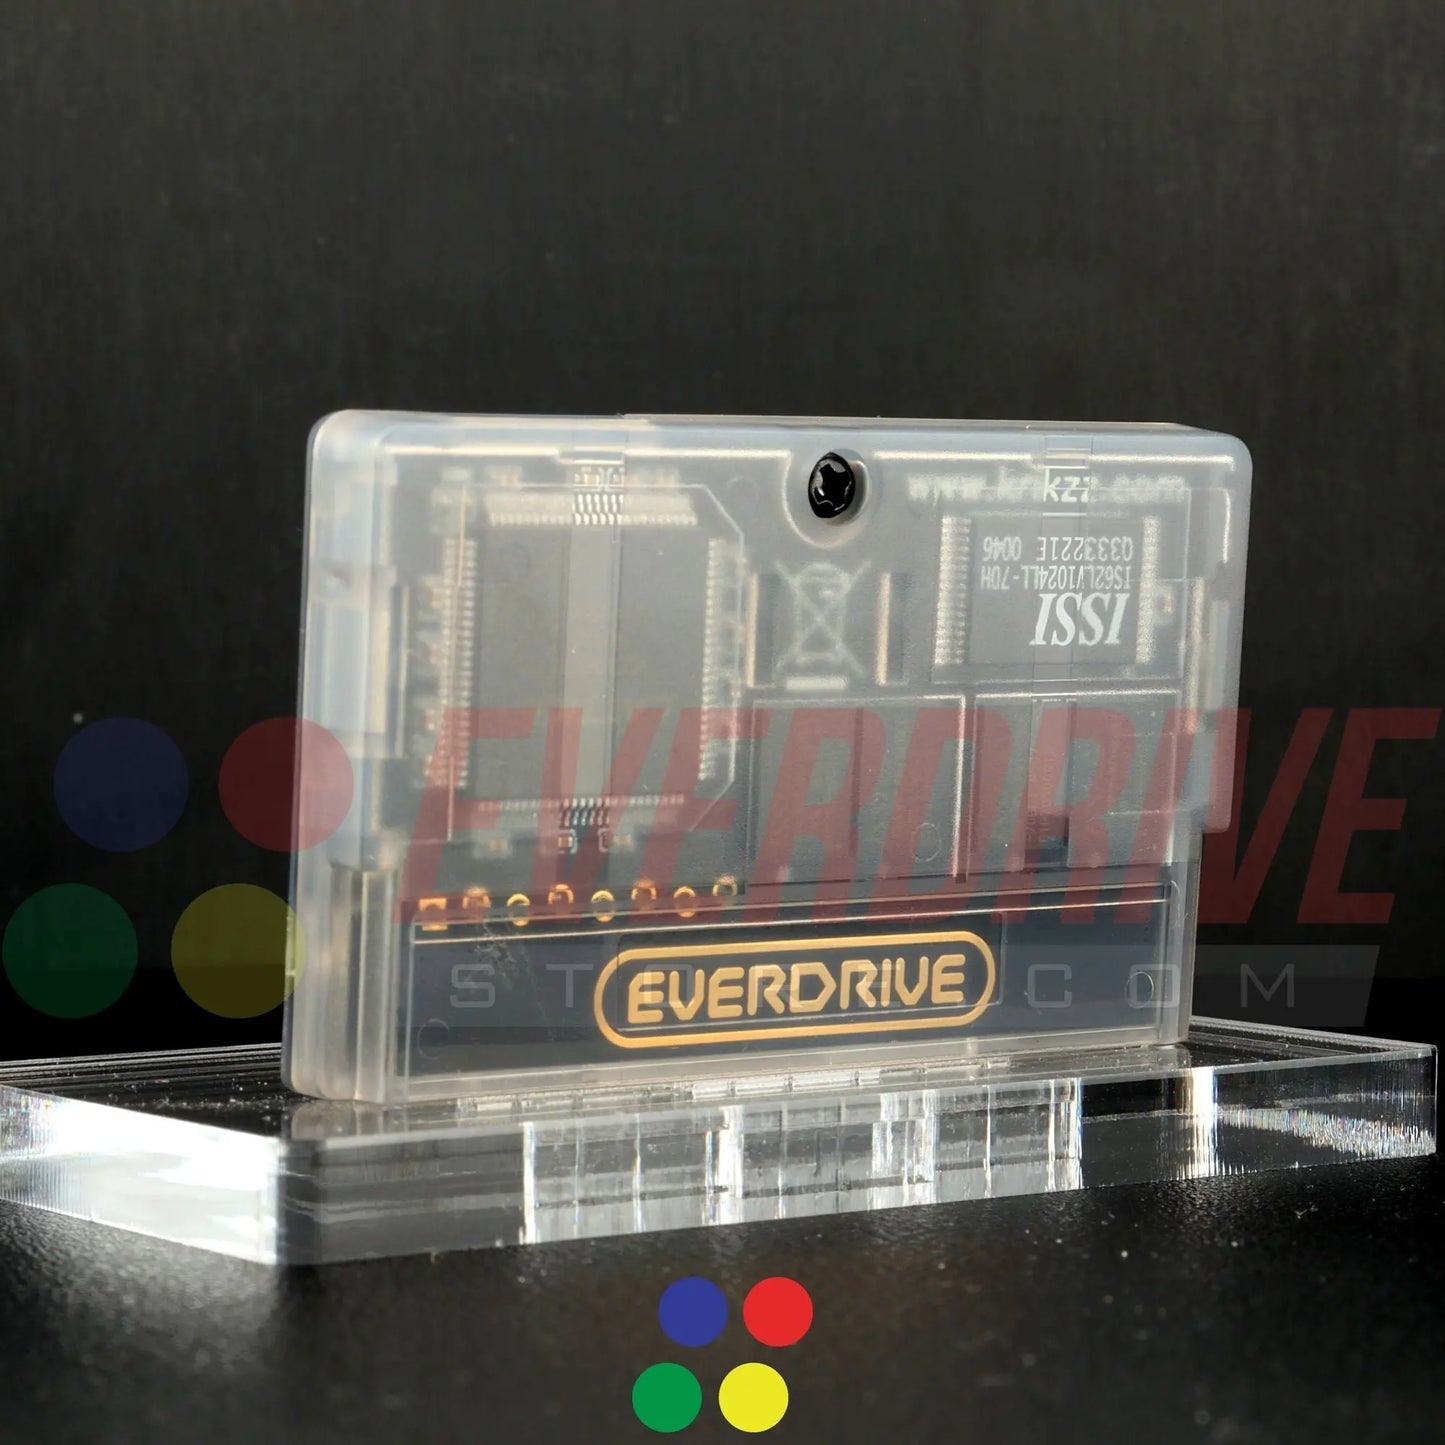 Everdrive GBA Mini - Frosted Black Krikzz